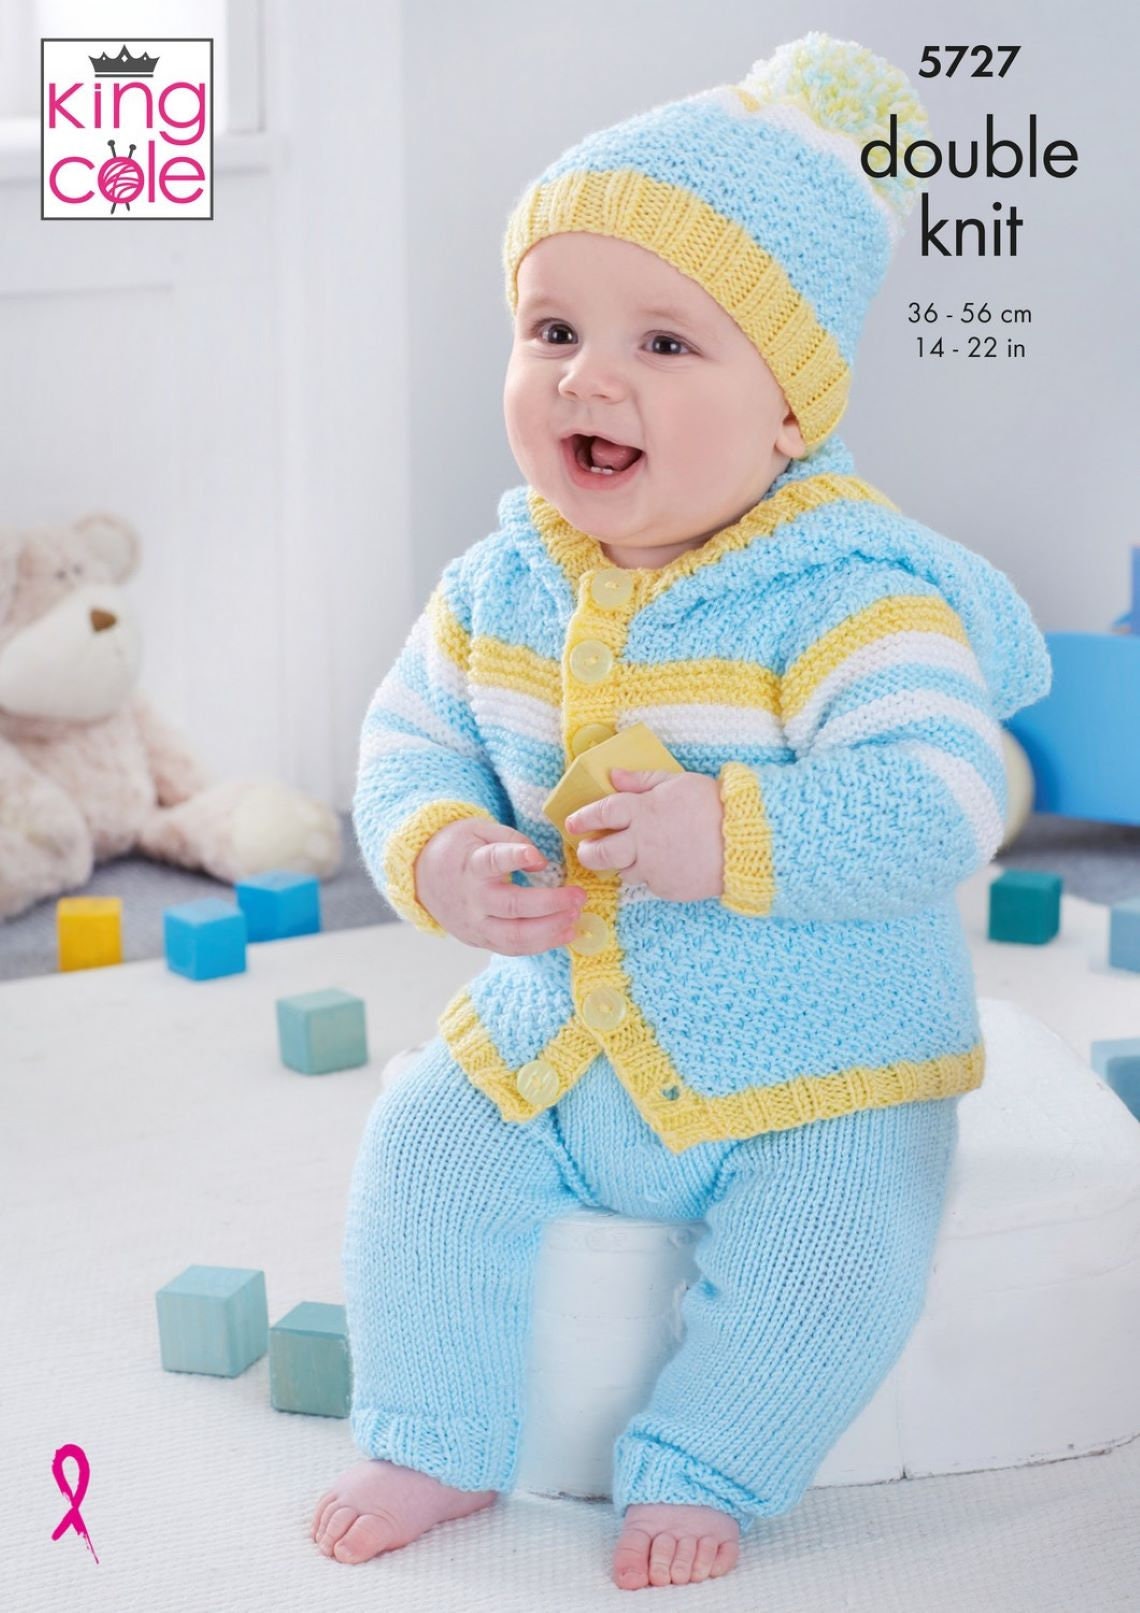 King Cole Knitting Pattern 5727. Baby Set in King Cole | Etsy UK